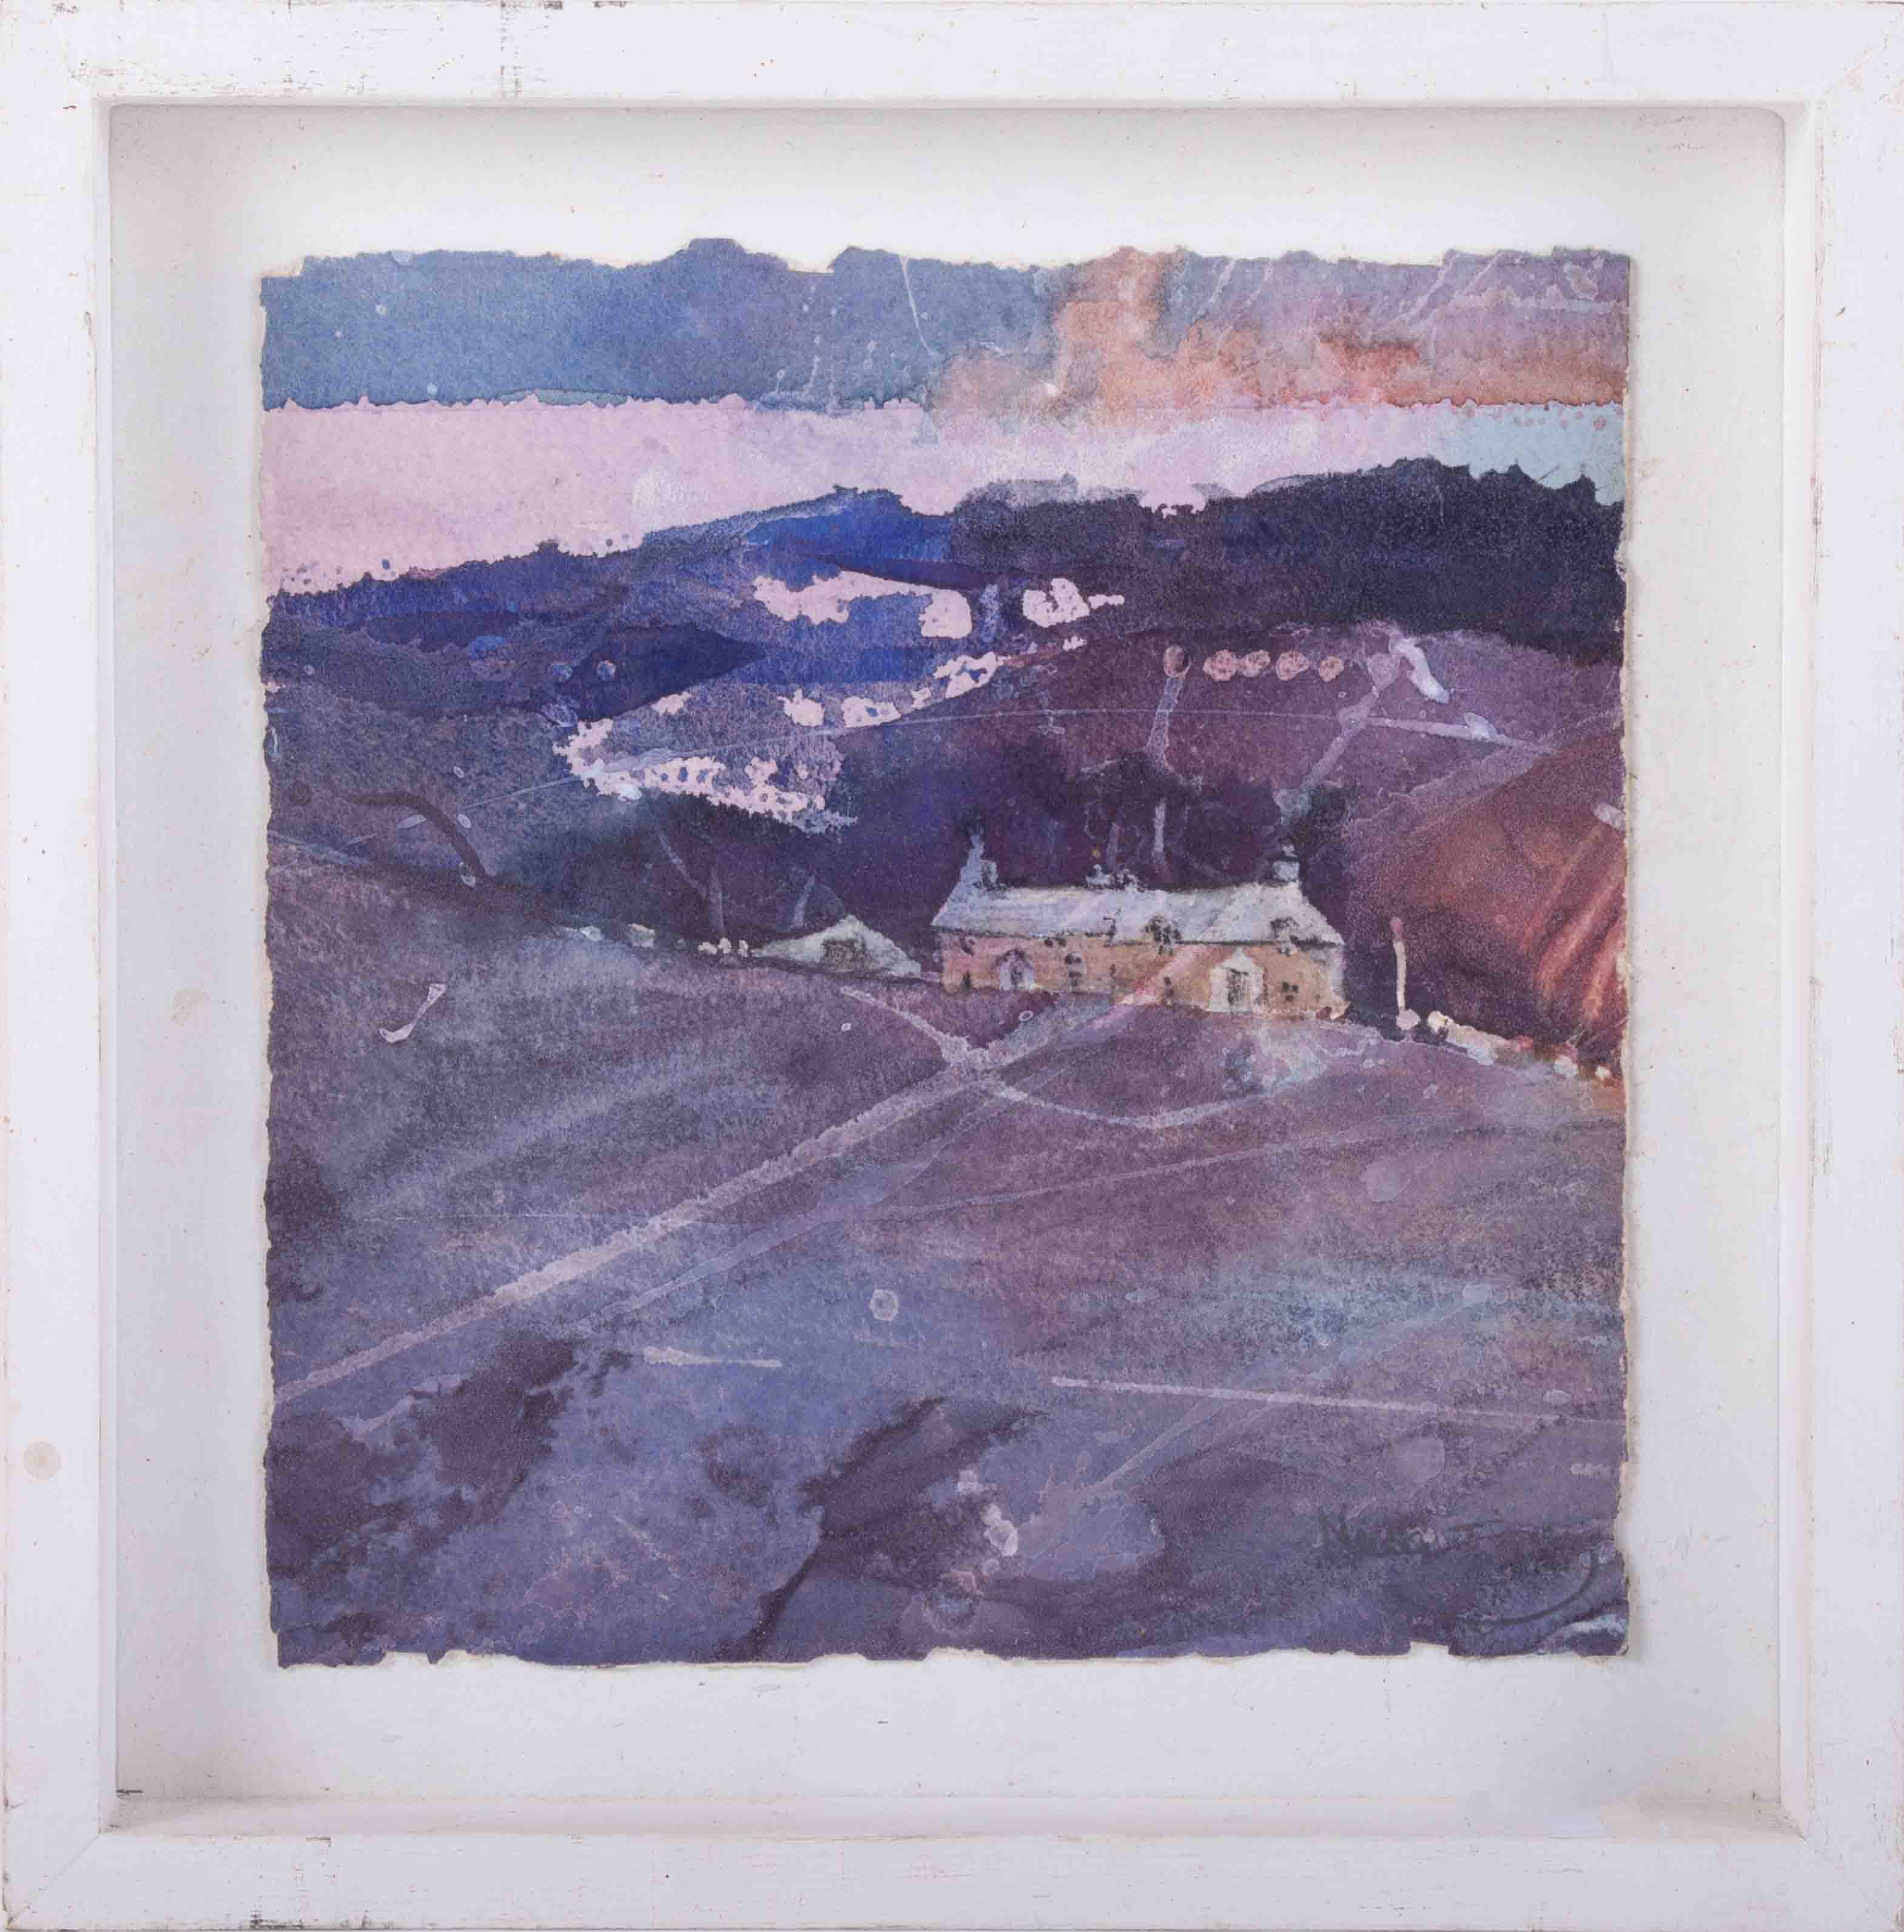 Nicola Tilley, 'Home Farm, 2008' watercolour, 21cm x 21cm, framed.